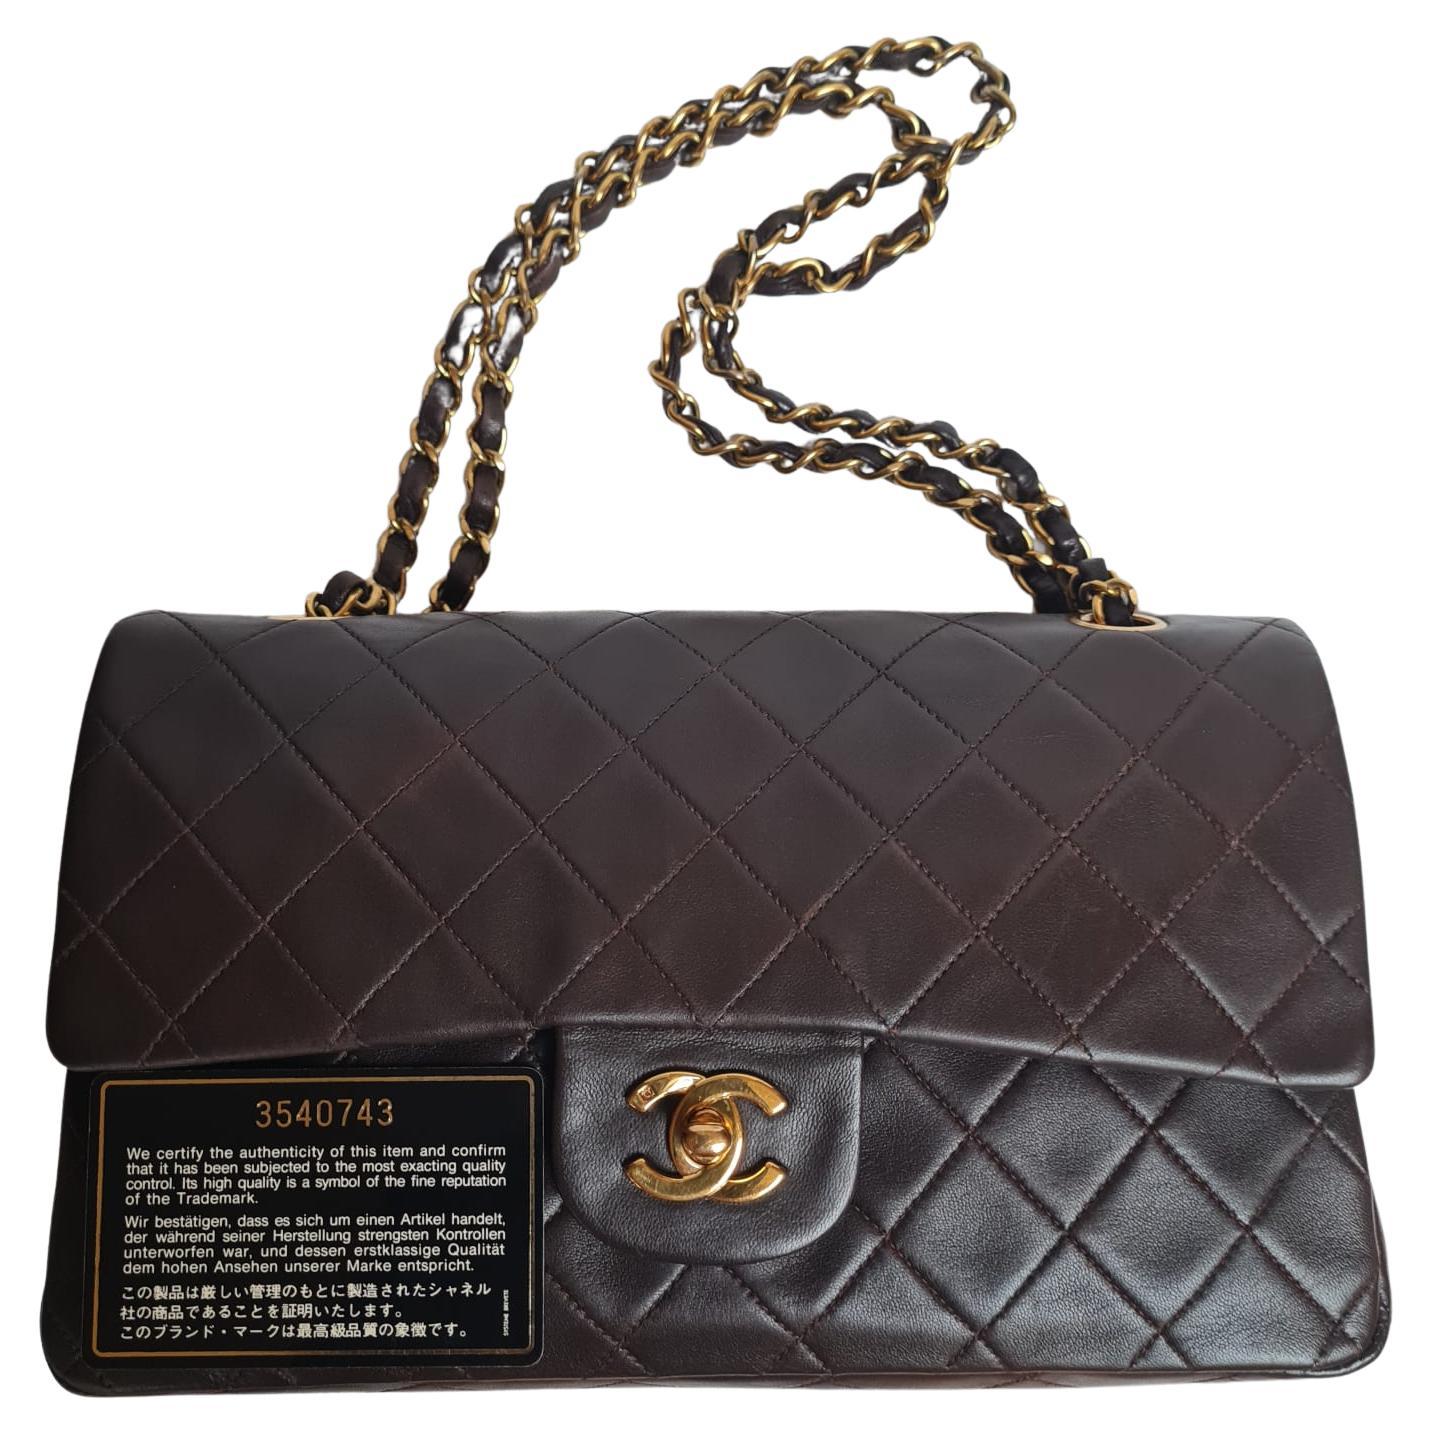 1990s Vintage Chanel Medium Dark Brown Leather Flap Bag